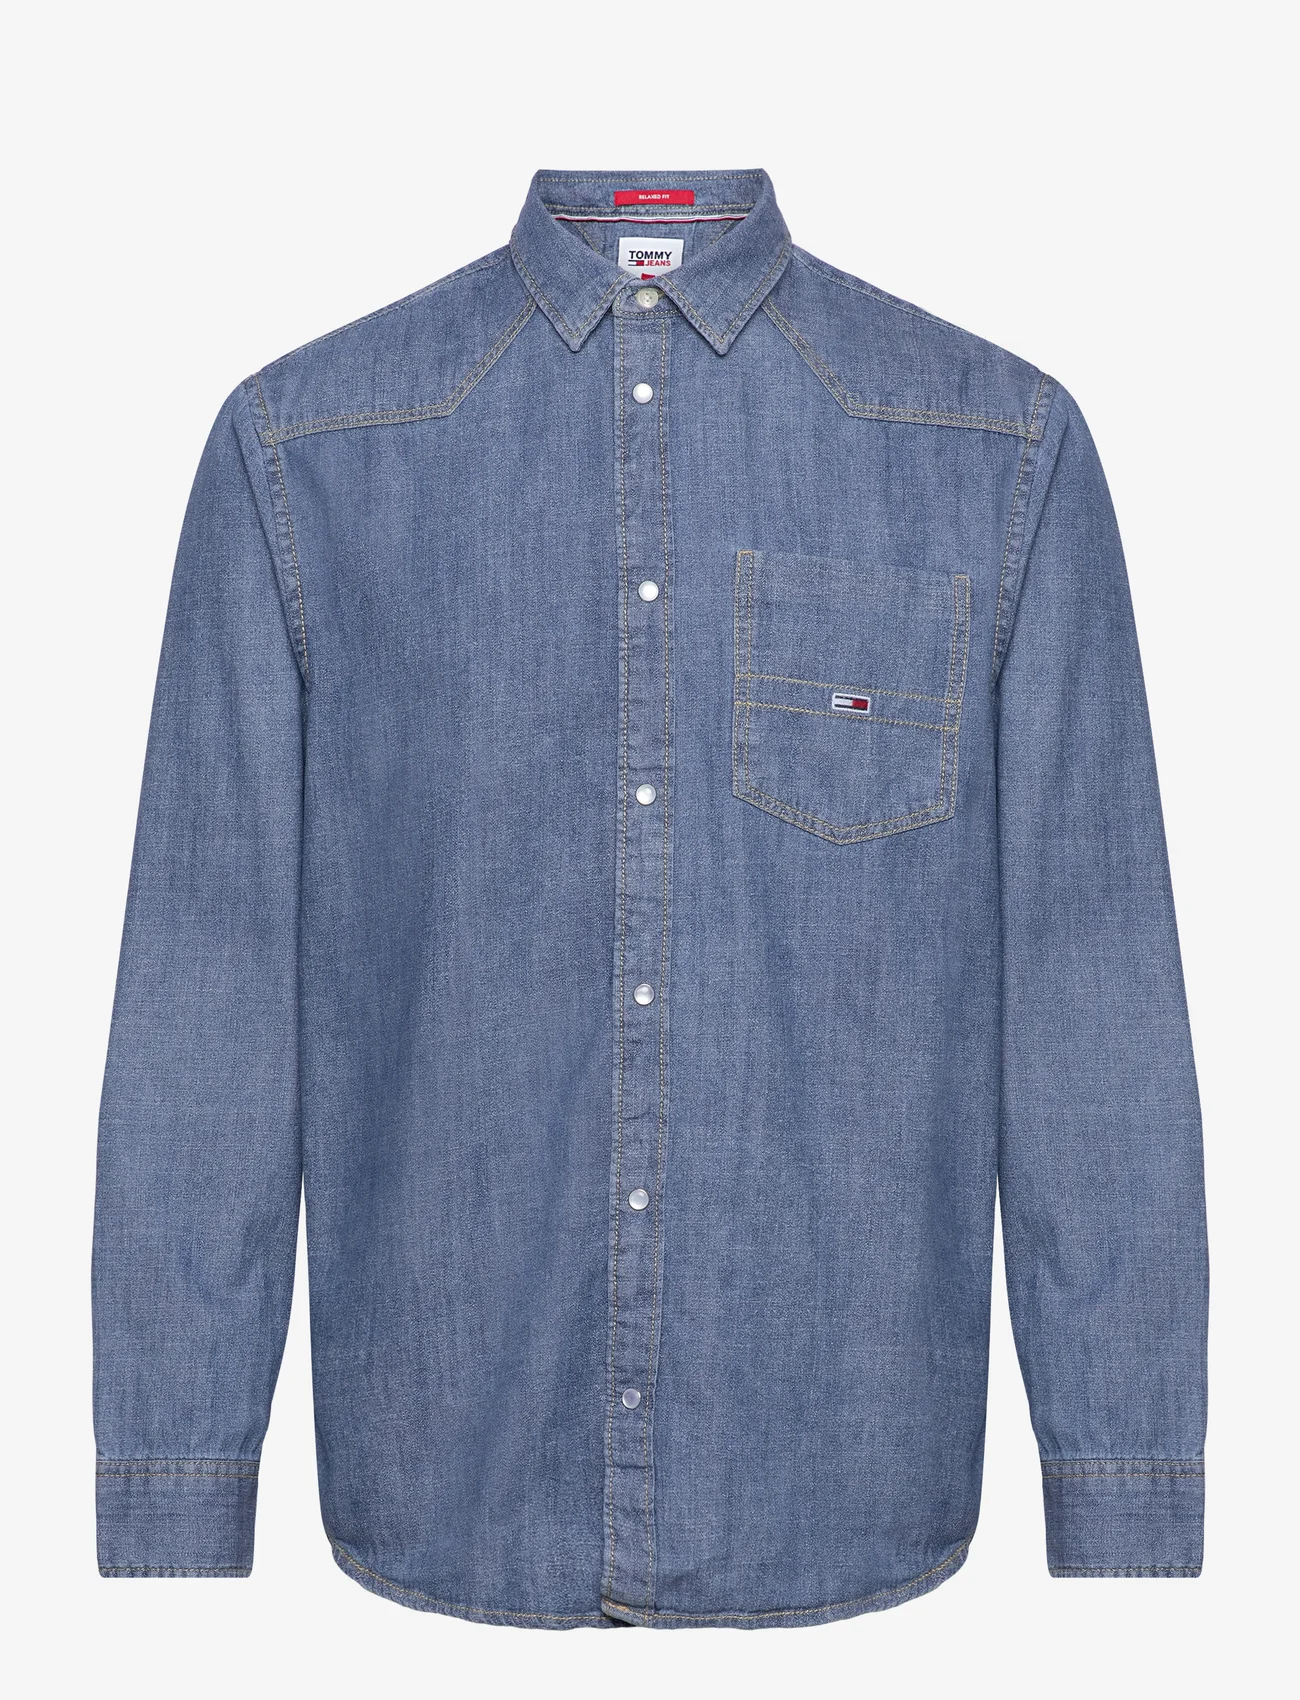 Tommy Jeans - TJM RLX WESTERN DENIM SHIRT - jeansskjortor - mid indigo wash - 0